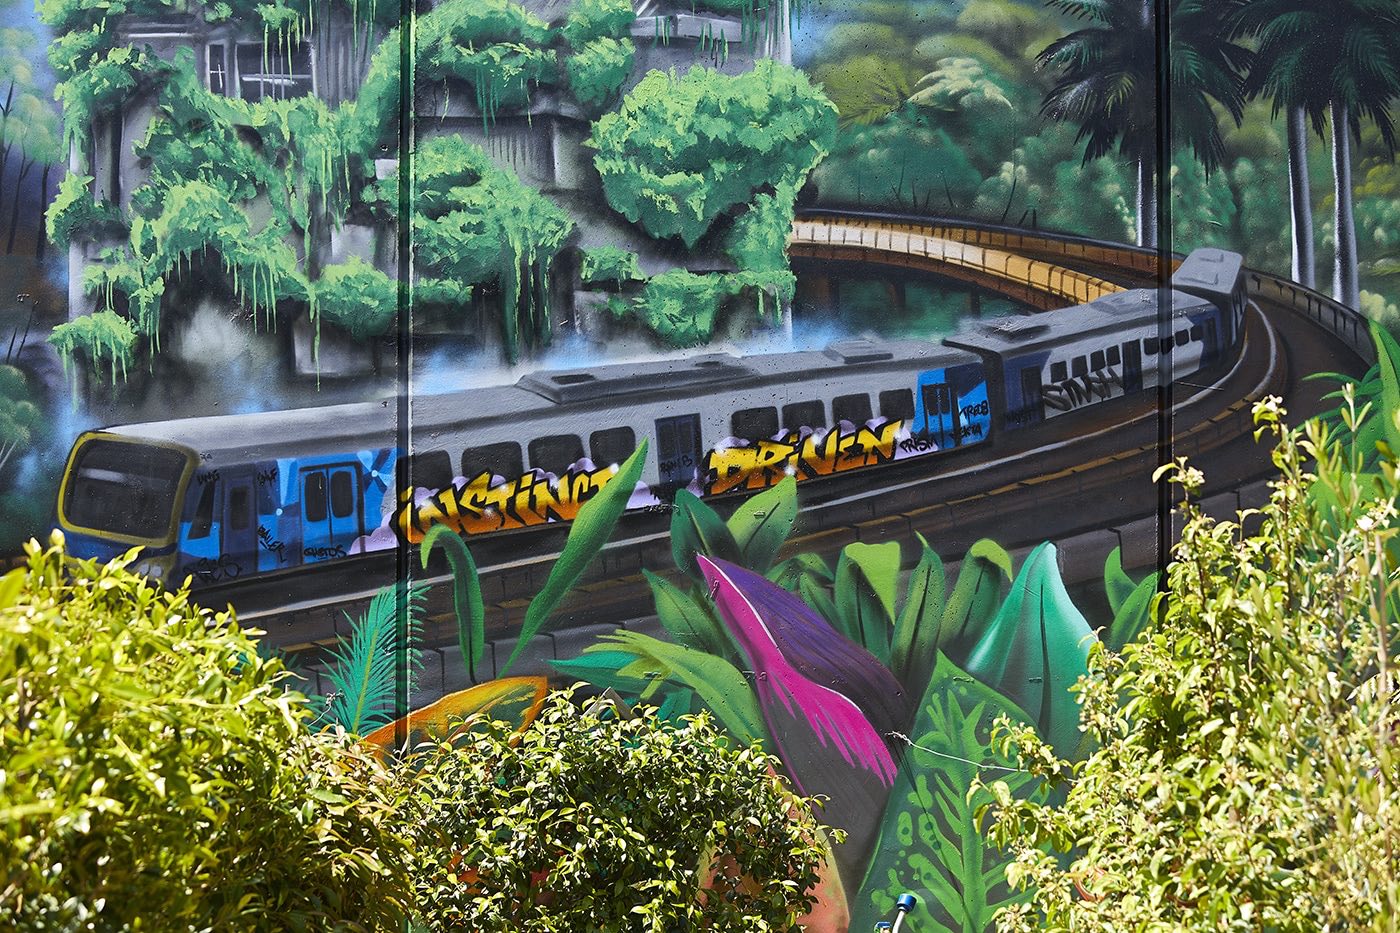 Close up of graffiti train